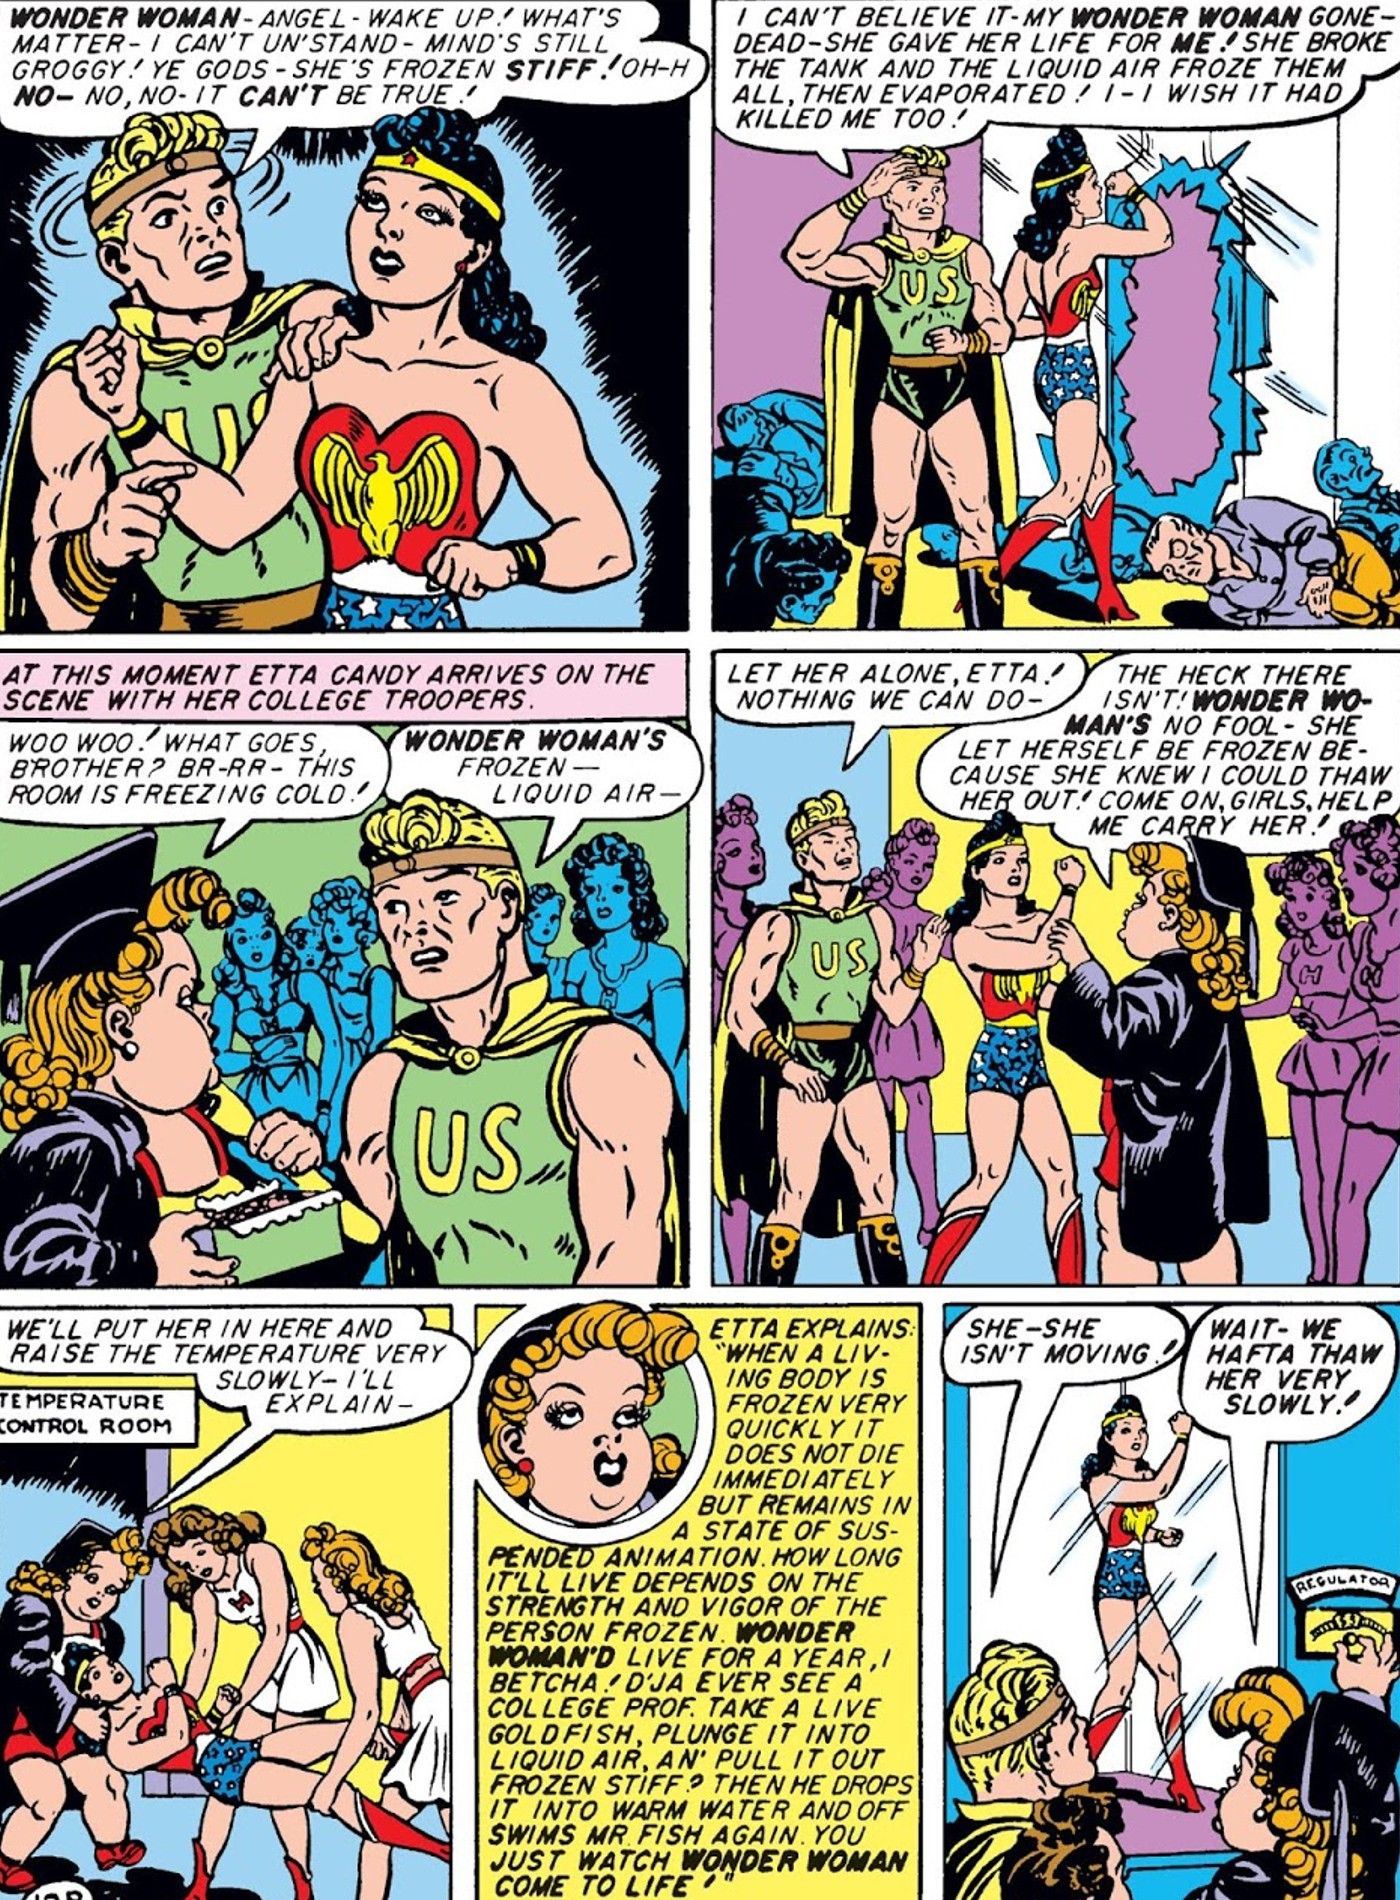 DC Froze Wonder Woman Long Before Marvel Froze Captain America